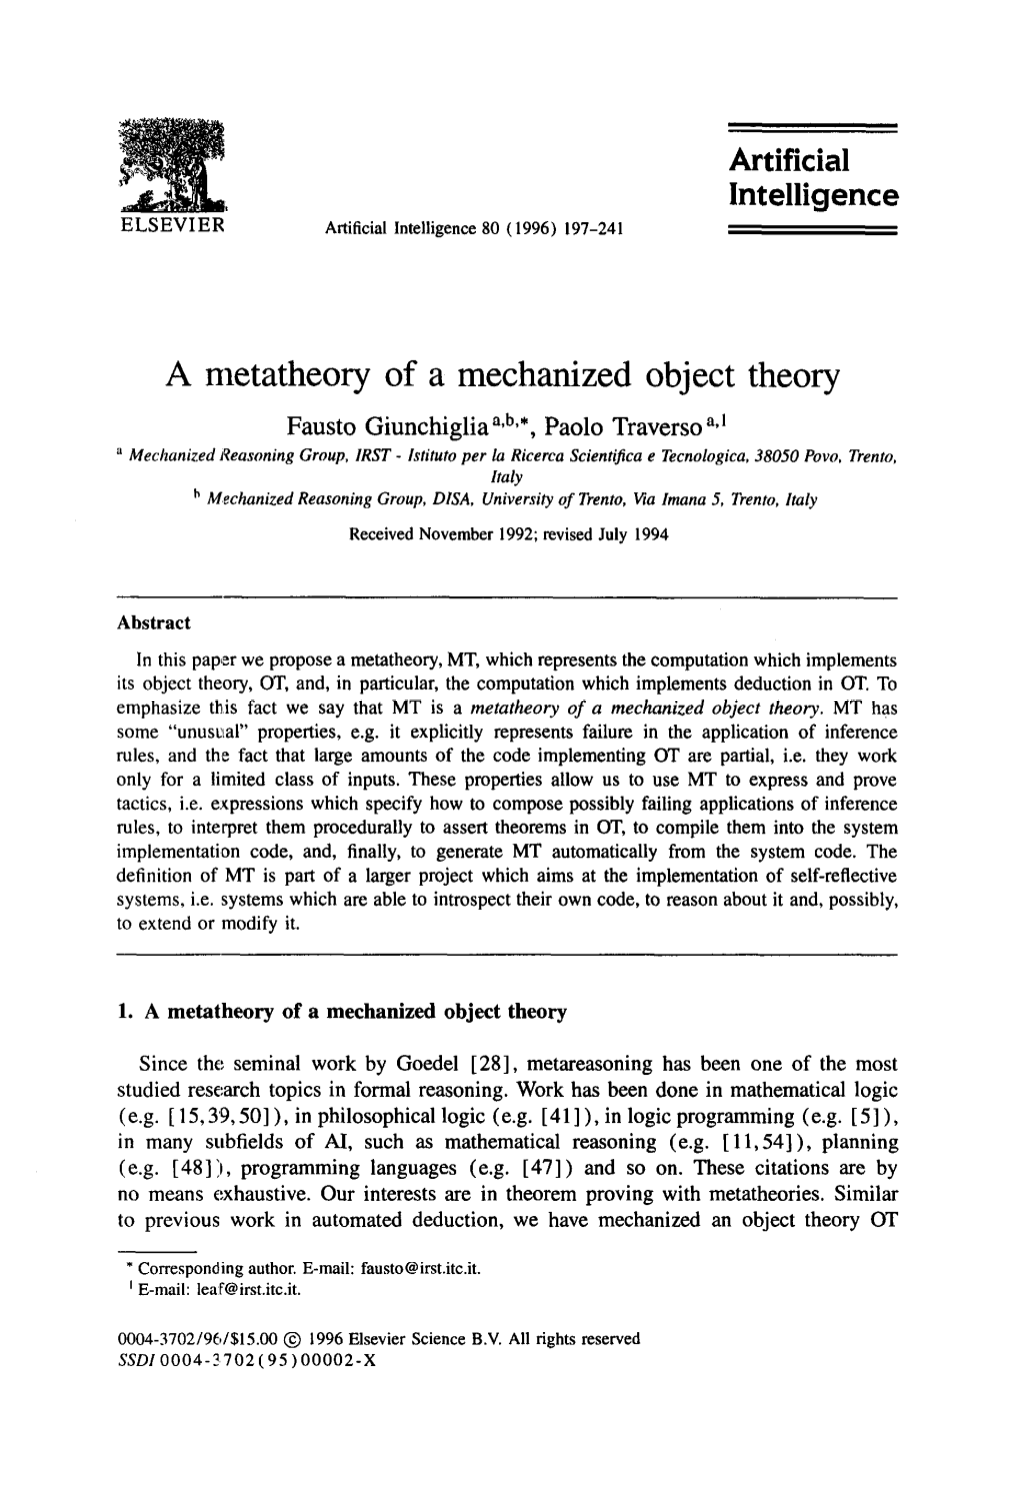 A Metatheory of a Mechanized Object Theory